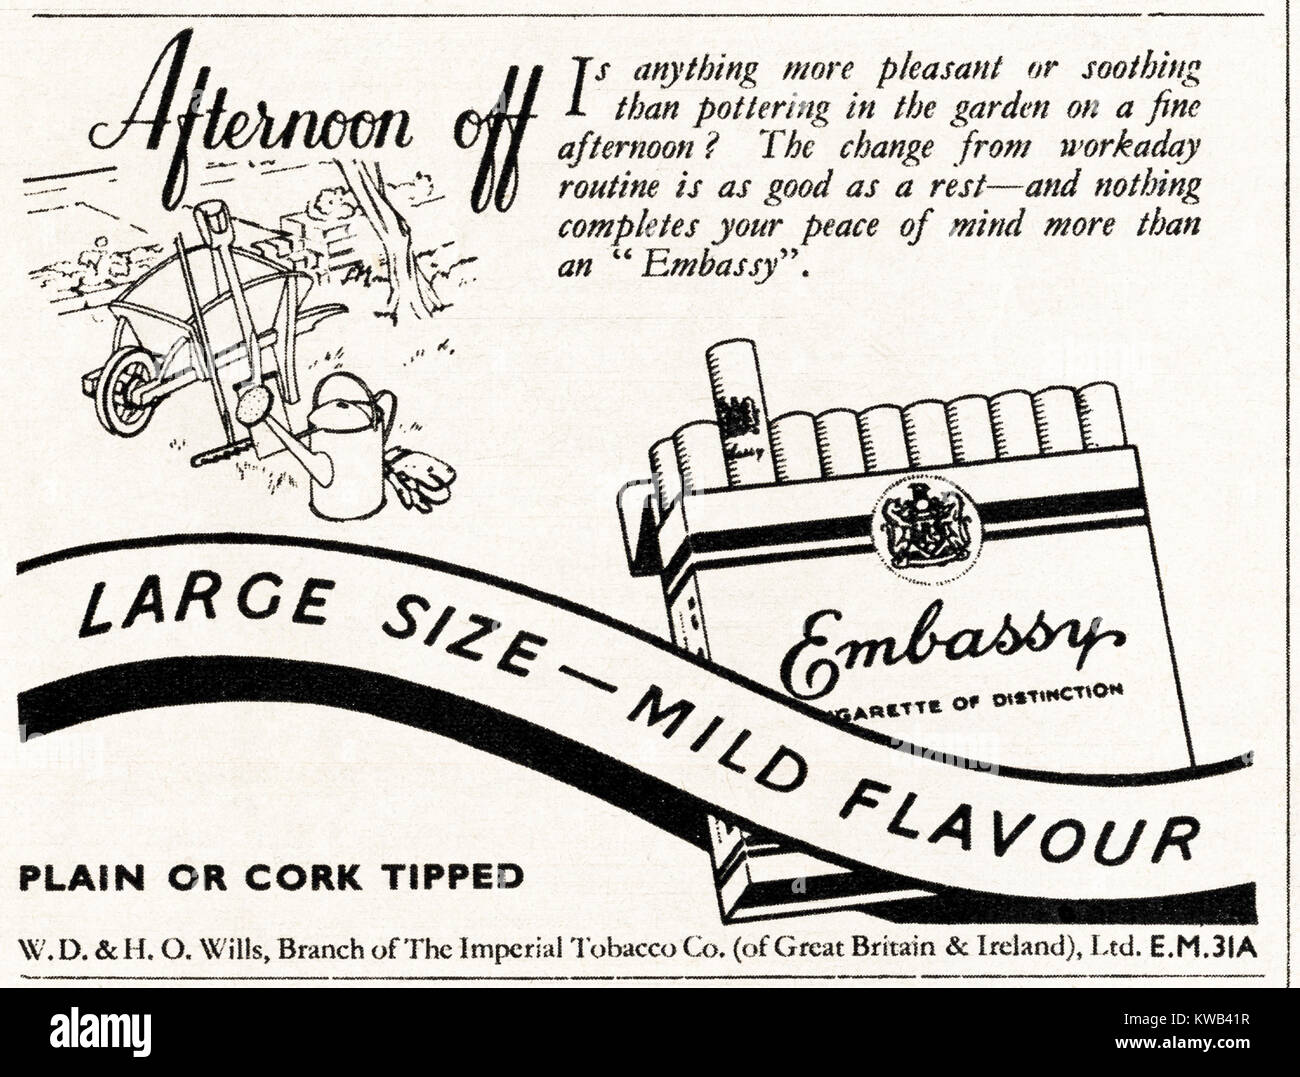 1940s old vintage original advert advertising Embassy cigarettes in magazine circa 1947 when supplies were still restricted under postwar rationing Stock Photo